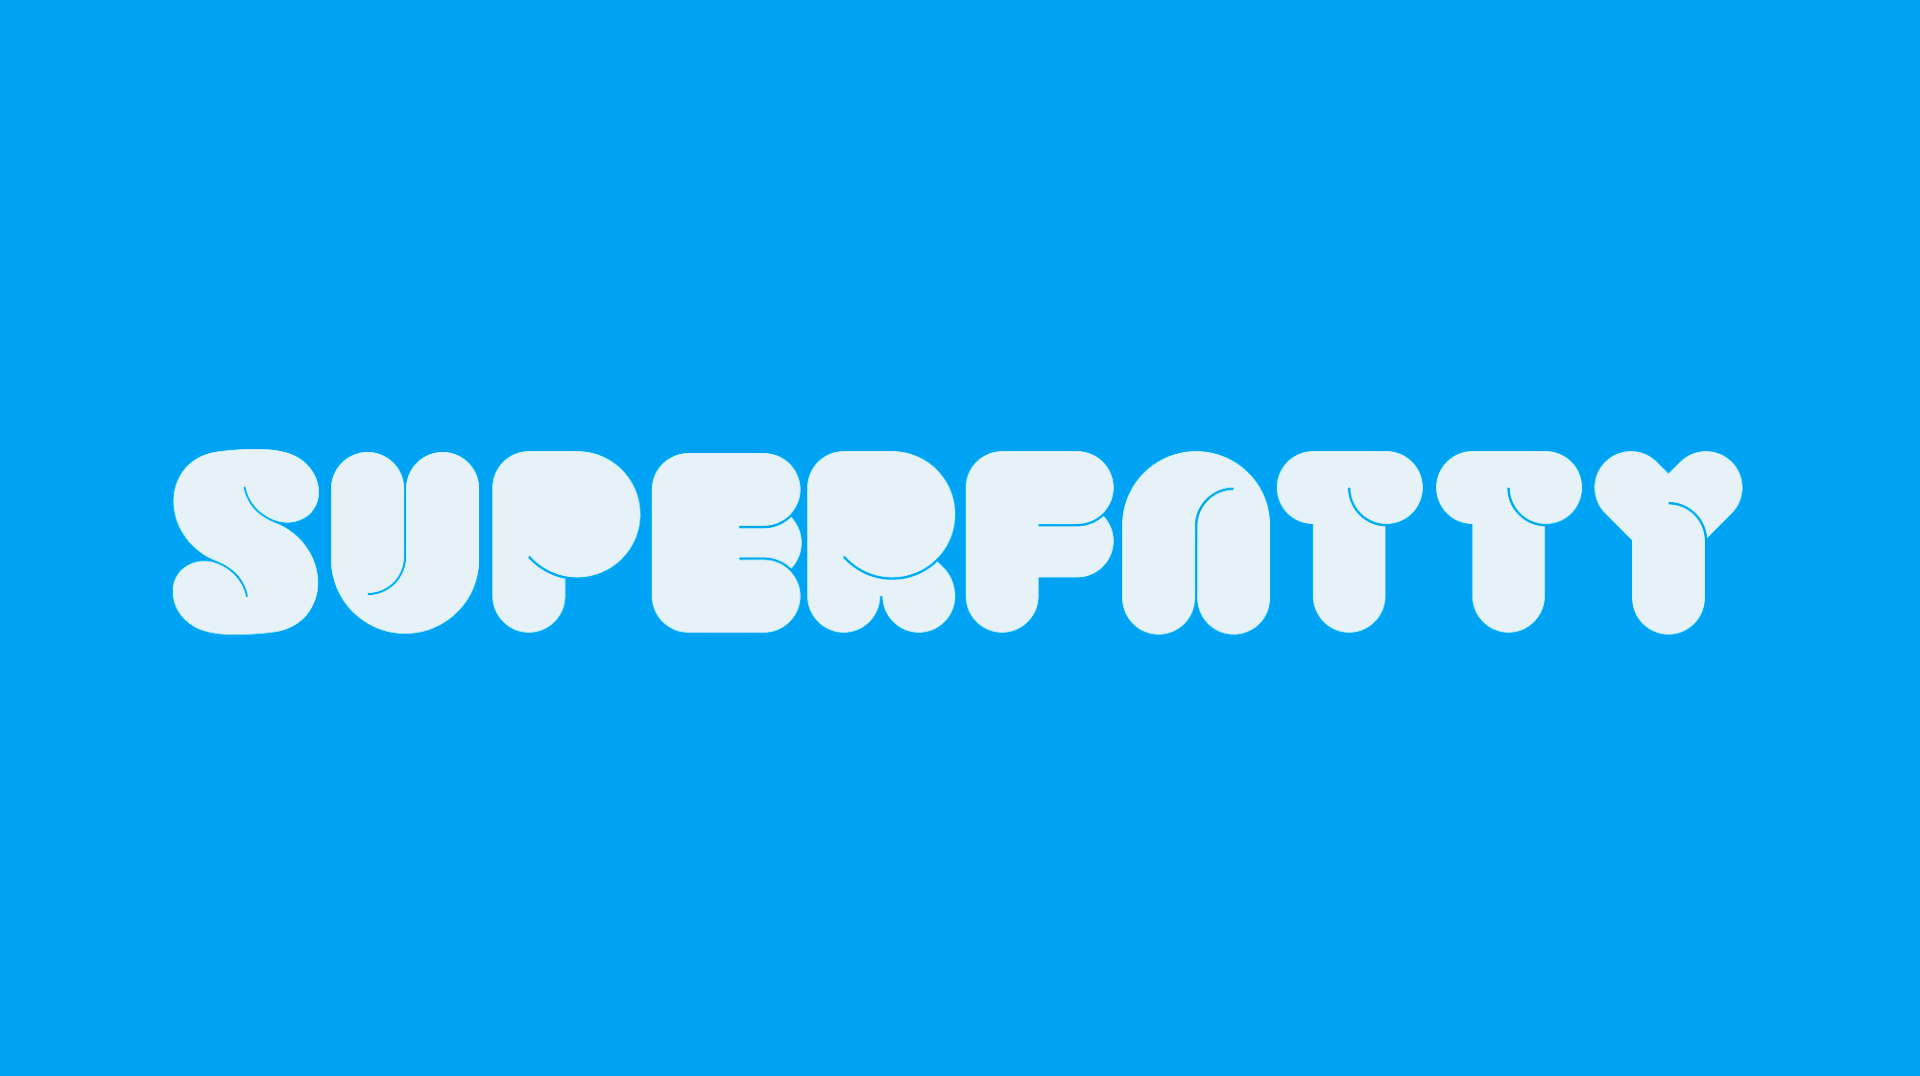 Superfatty